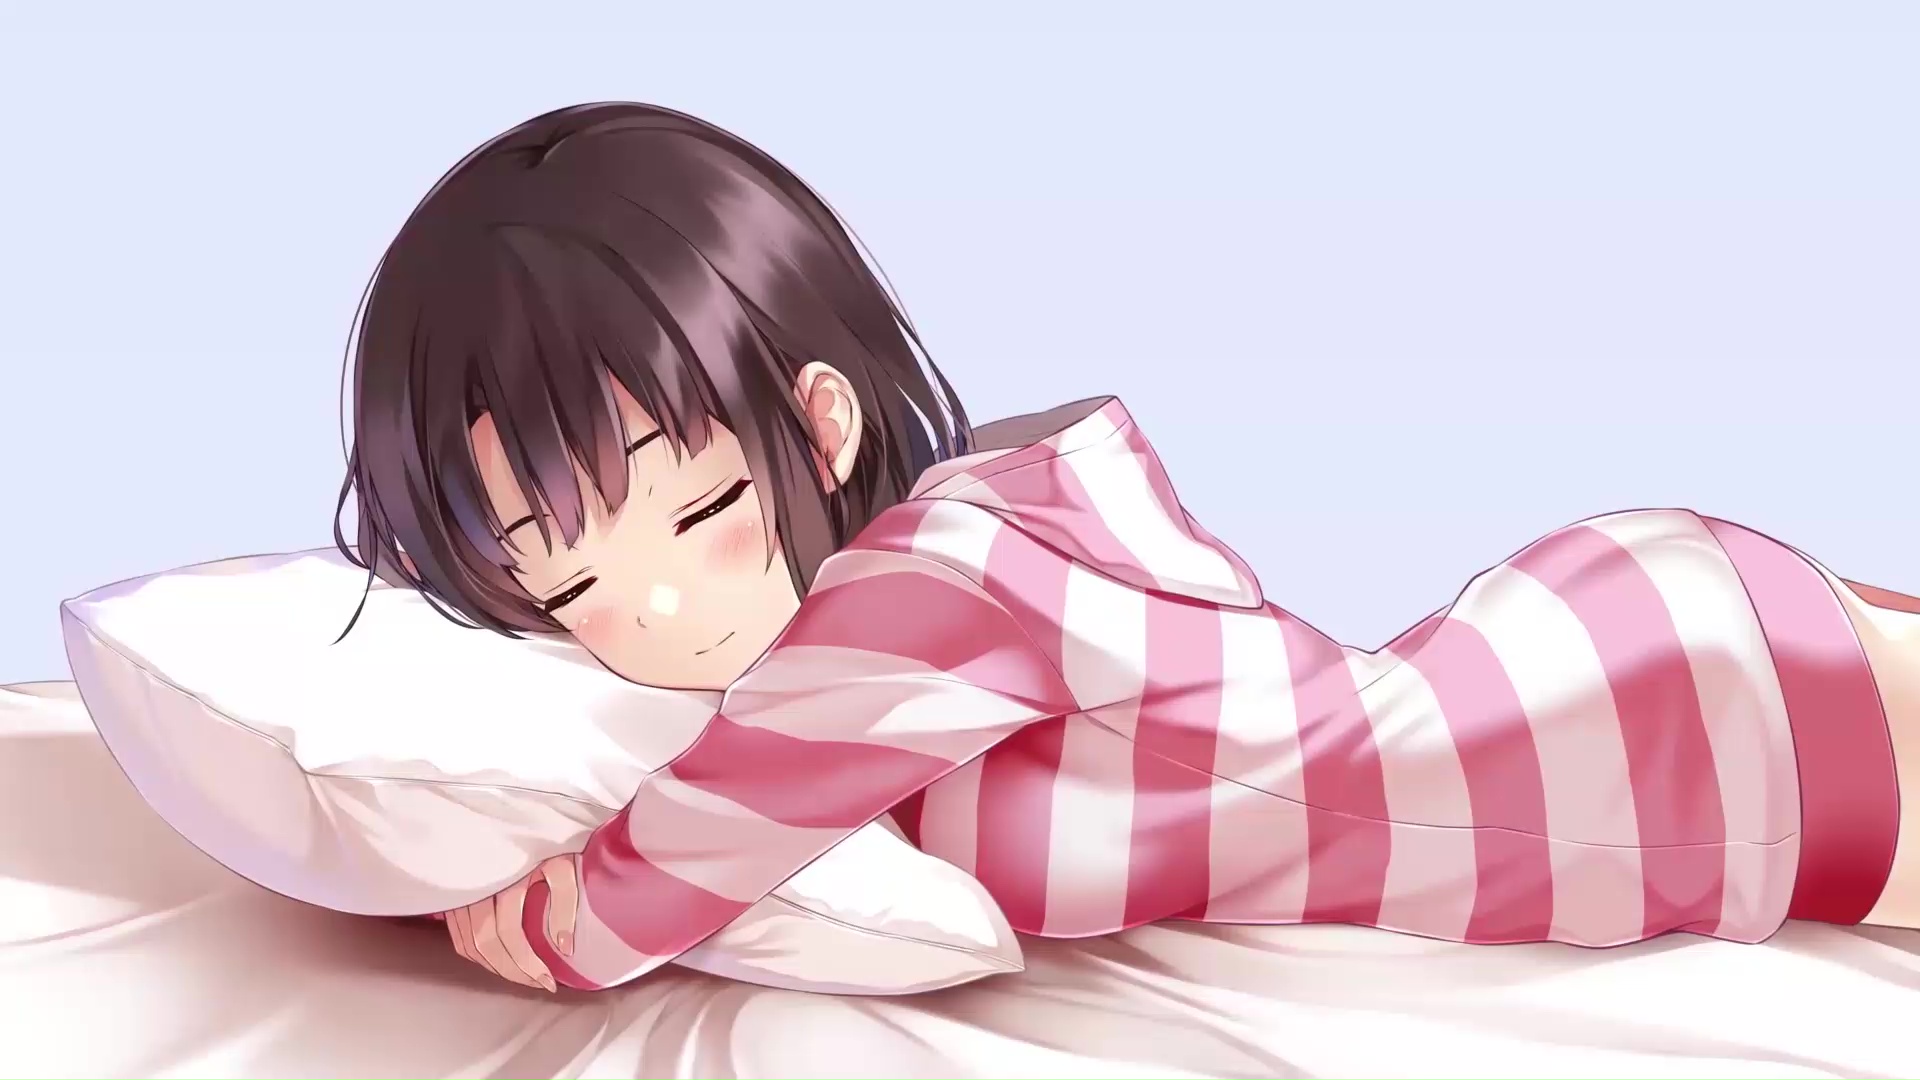 Sleeping Anime Girl Live Wallpaper Wallpaperwaifu